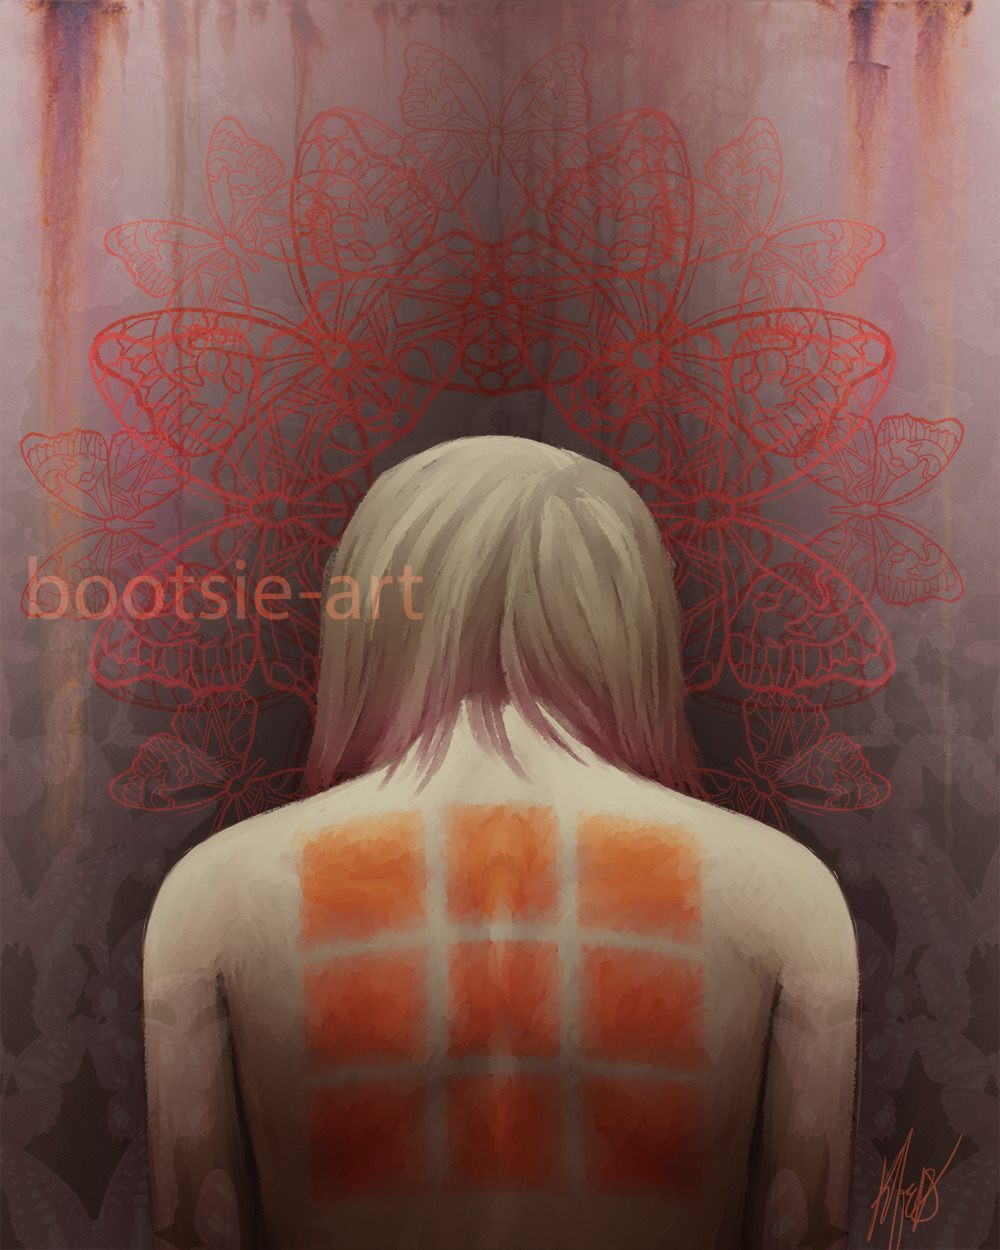 fangirlinginleatherboots: Silent Hill 2 | Born From a Wish bootsie-art.comblog: @bootsie-art​insta: